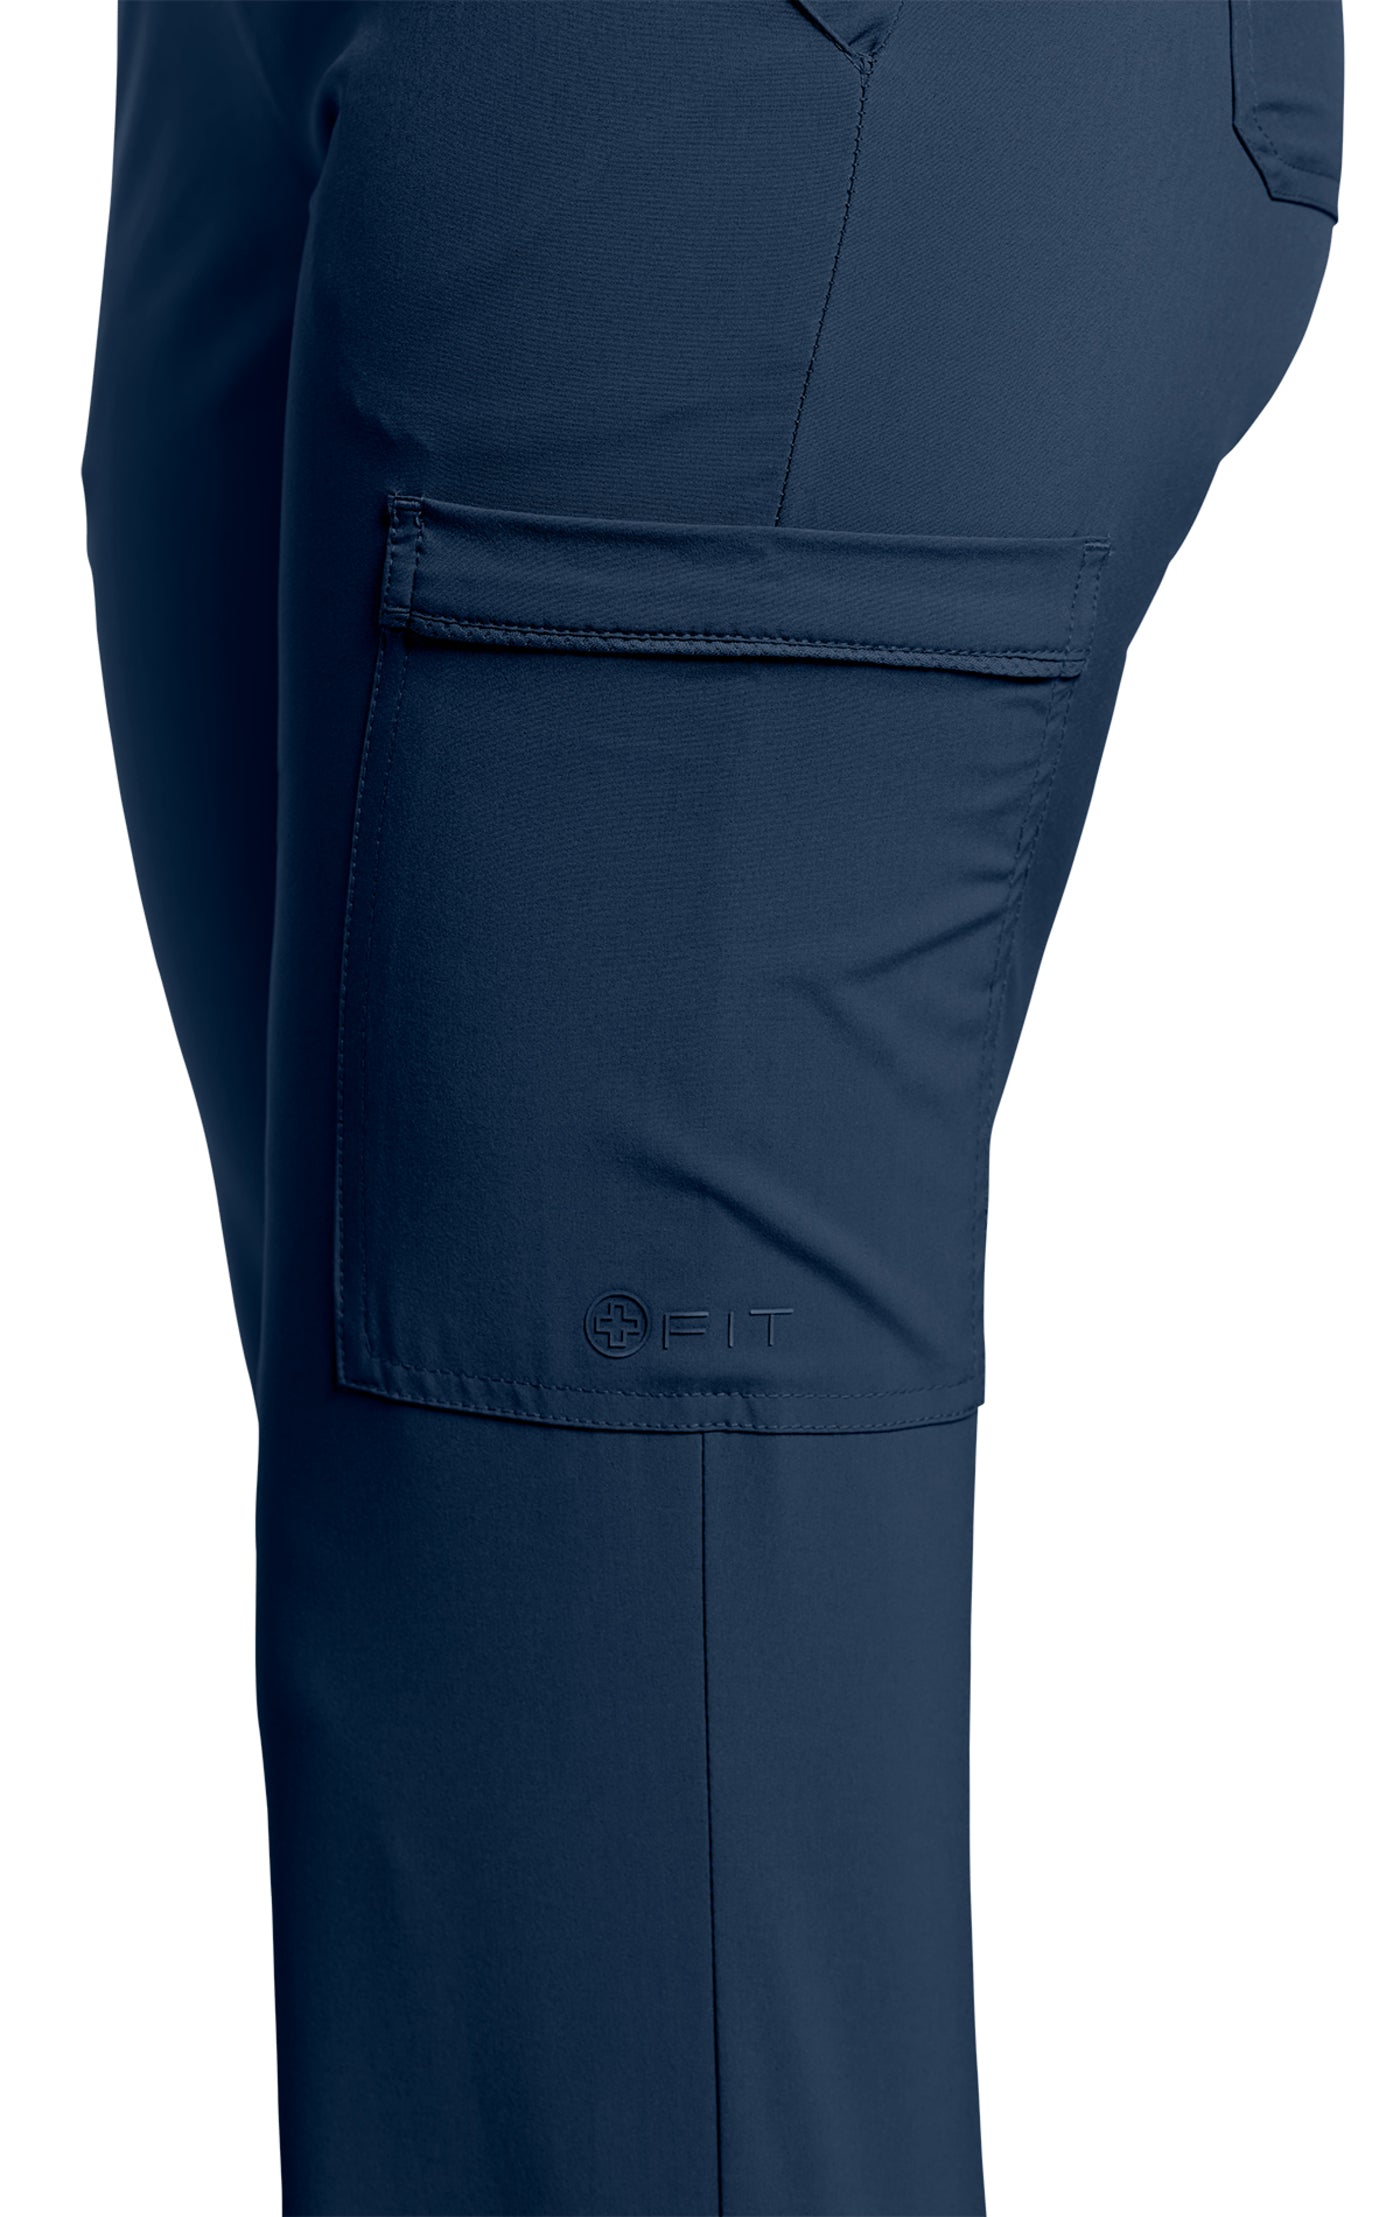 Whitecross 373 FIT Women's Cargo Comfortable Pants